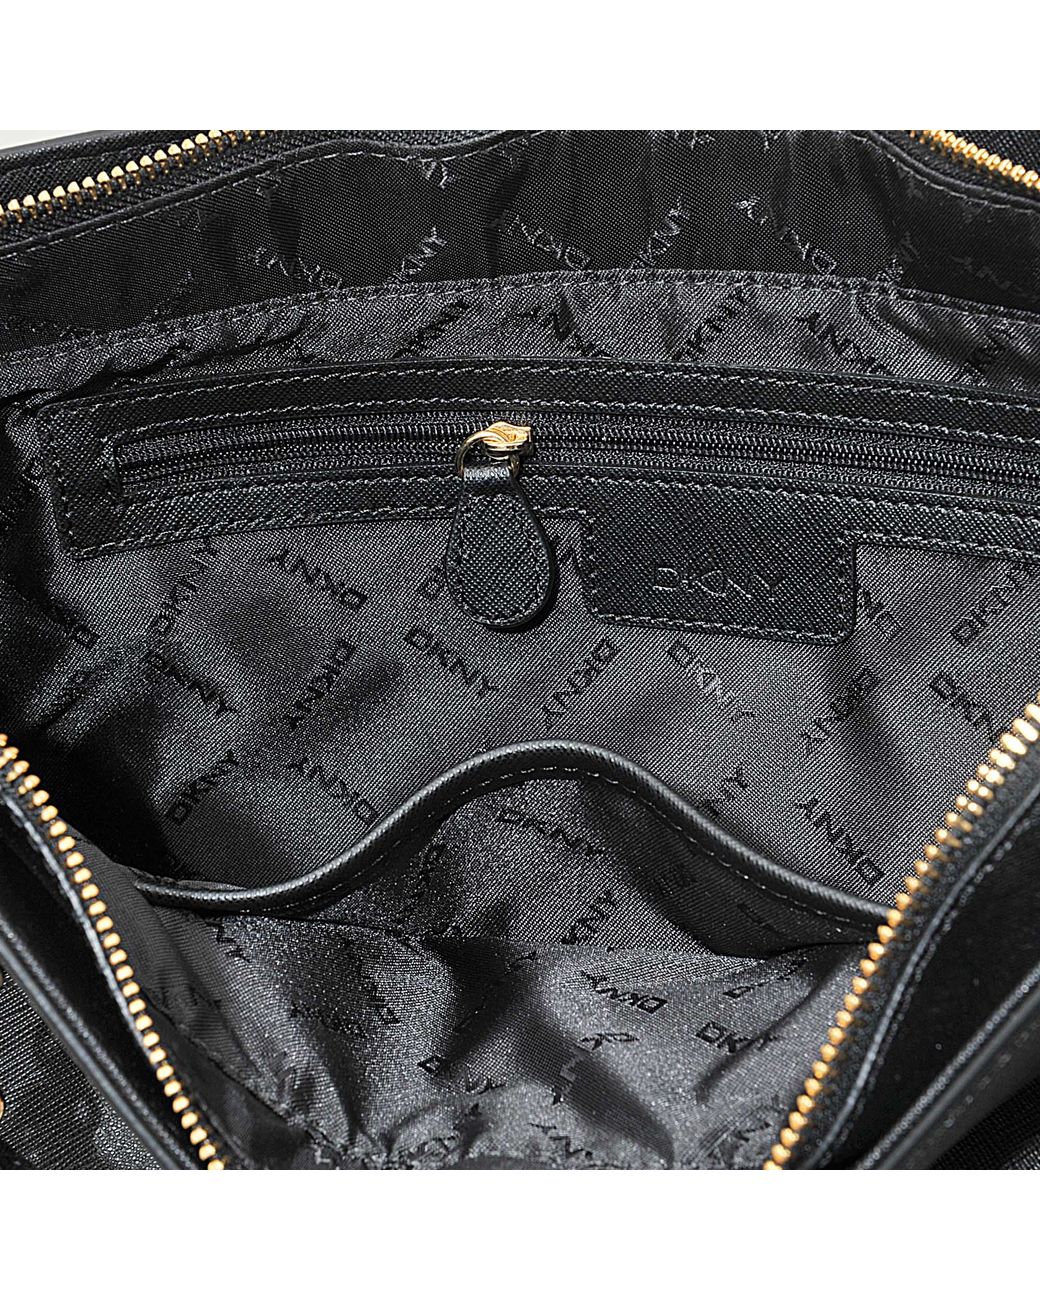 DKNY Bryant Park - Saffiano Leather Large Double Zip Shopper w